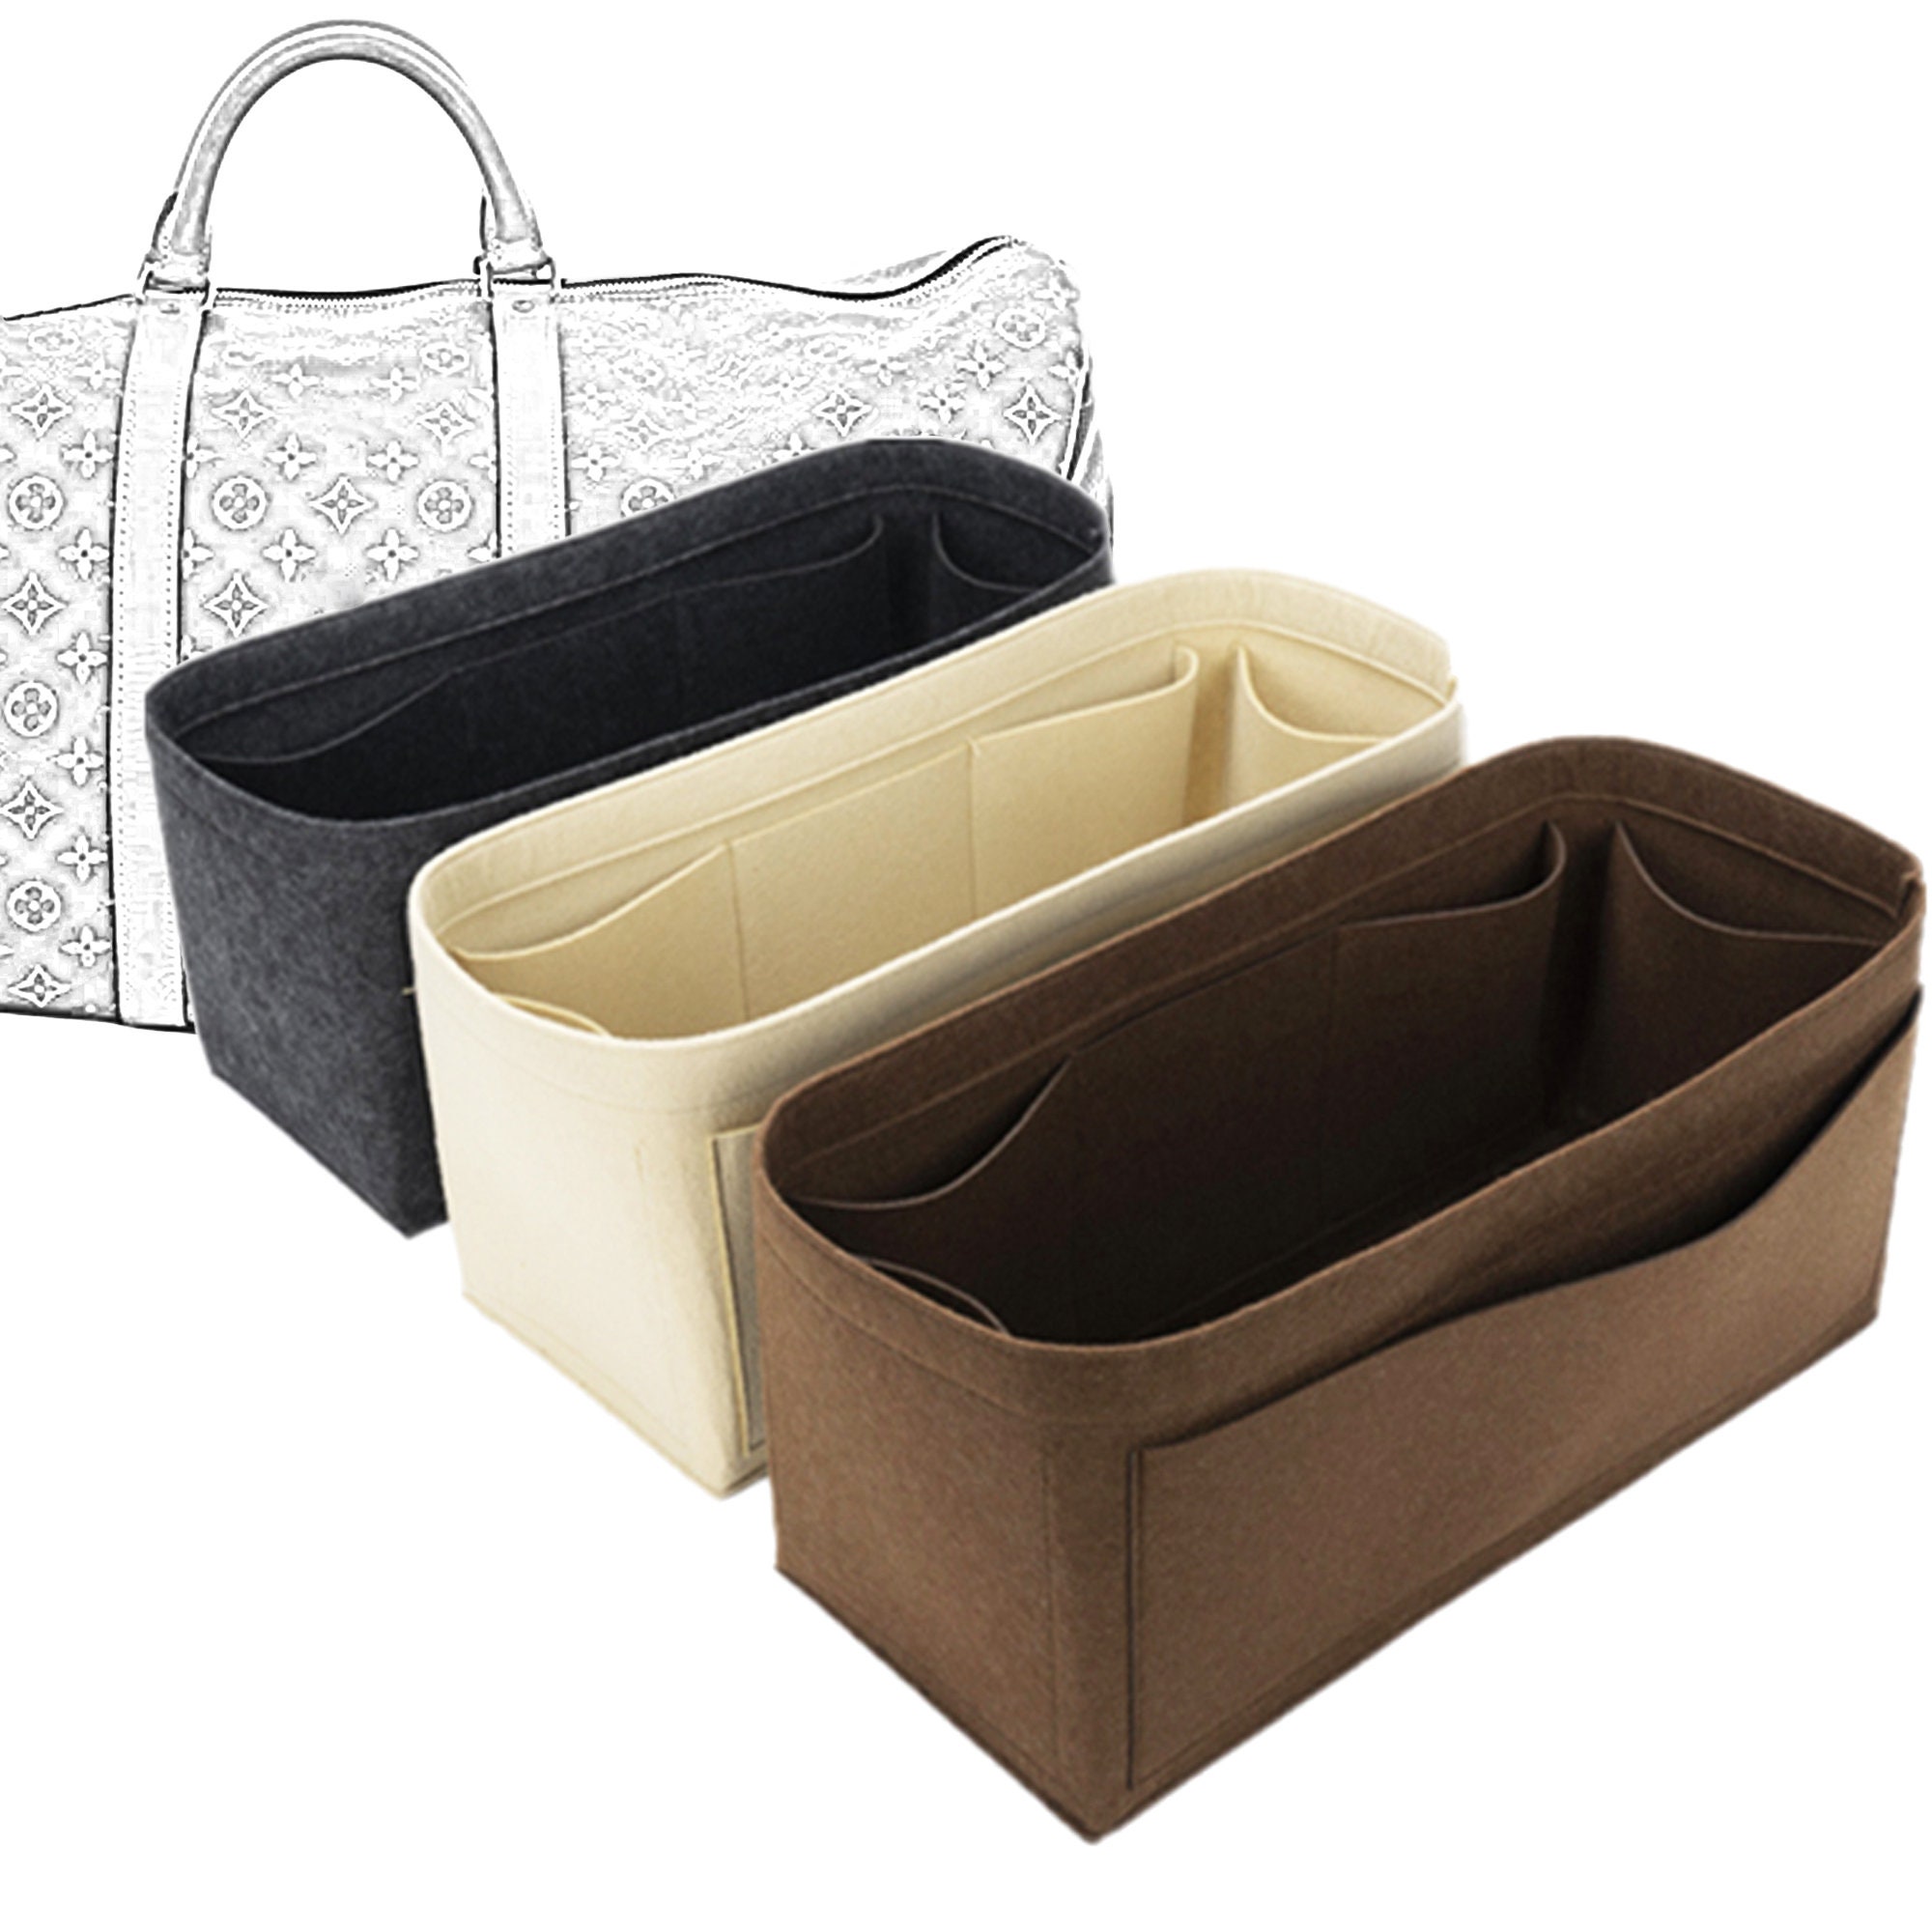  Zoomoni Premium Bag Organizer for Louis Vuitton Sac Plat PM  (Handmade/20 Color Options) [Purse Organiser, Liner, Insert, Shaper] :  Handmade Products